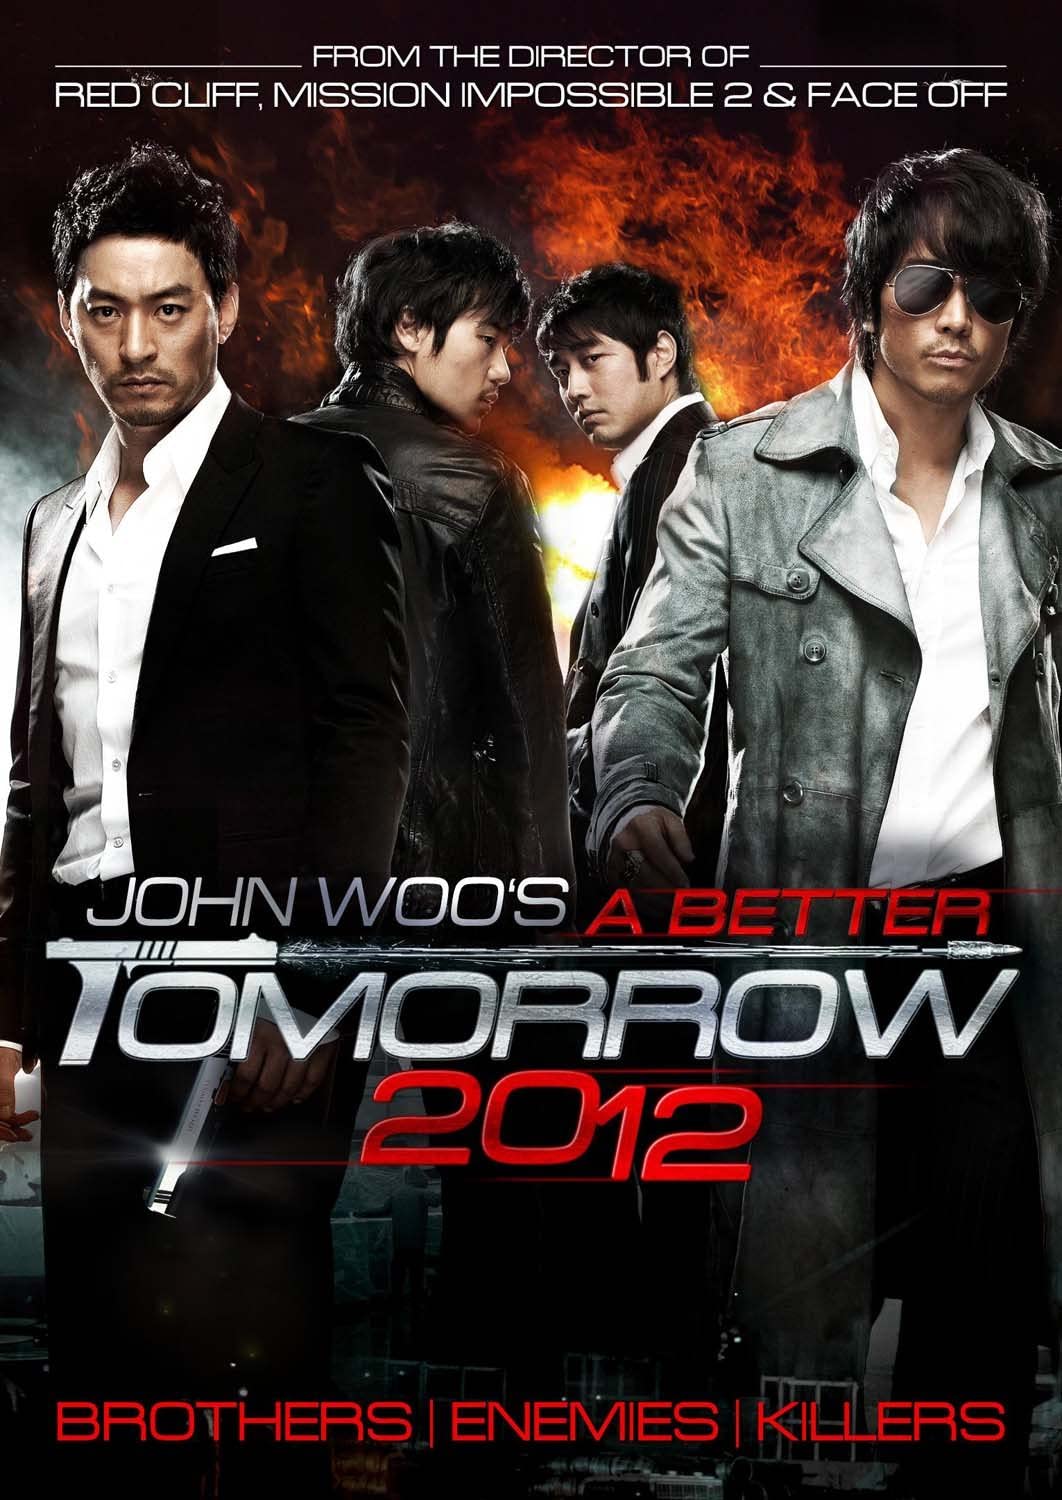 A Better Tomorrow 2012 (John Woo)